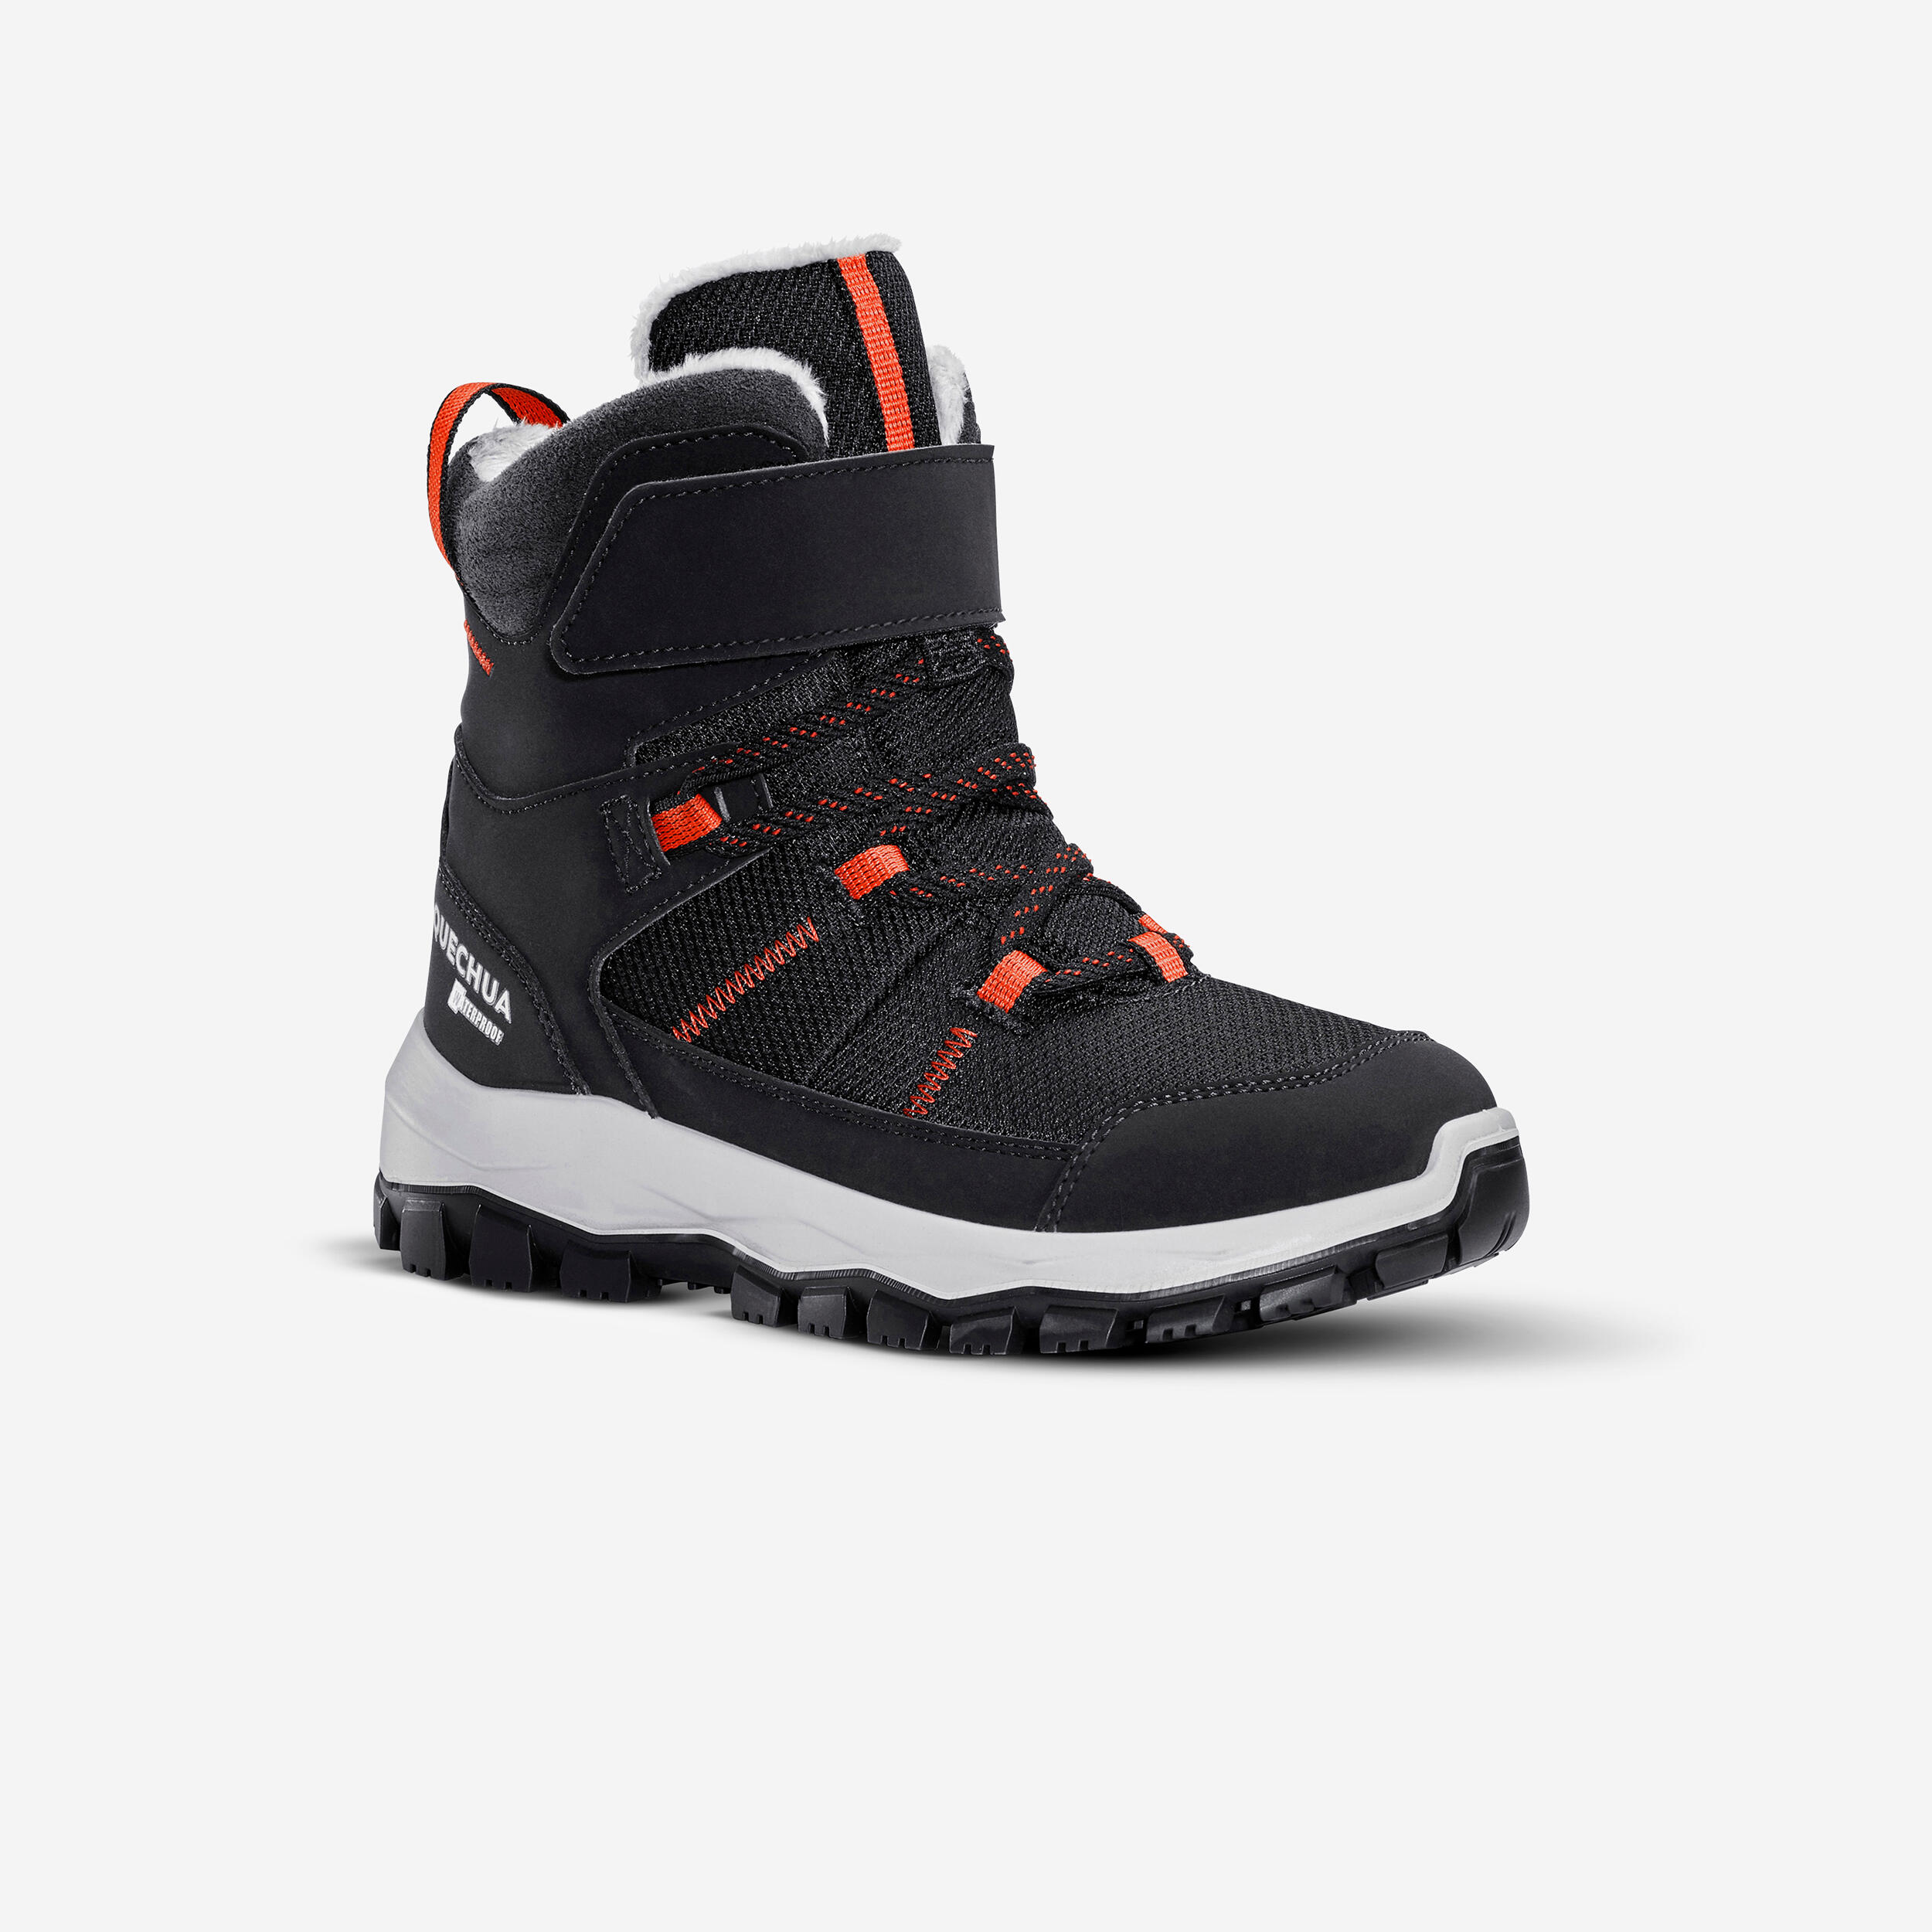 QUECHUA Children's warm waterproof hiking boots - SH500 MTN Velcro - Size 7J - 2